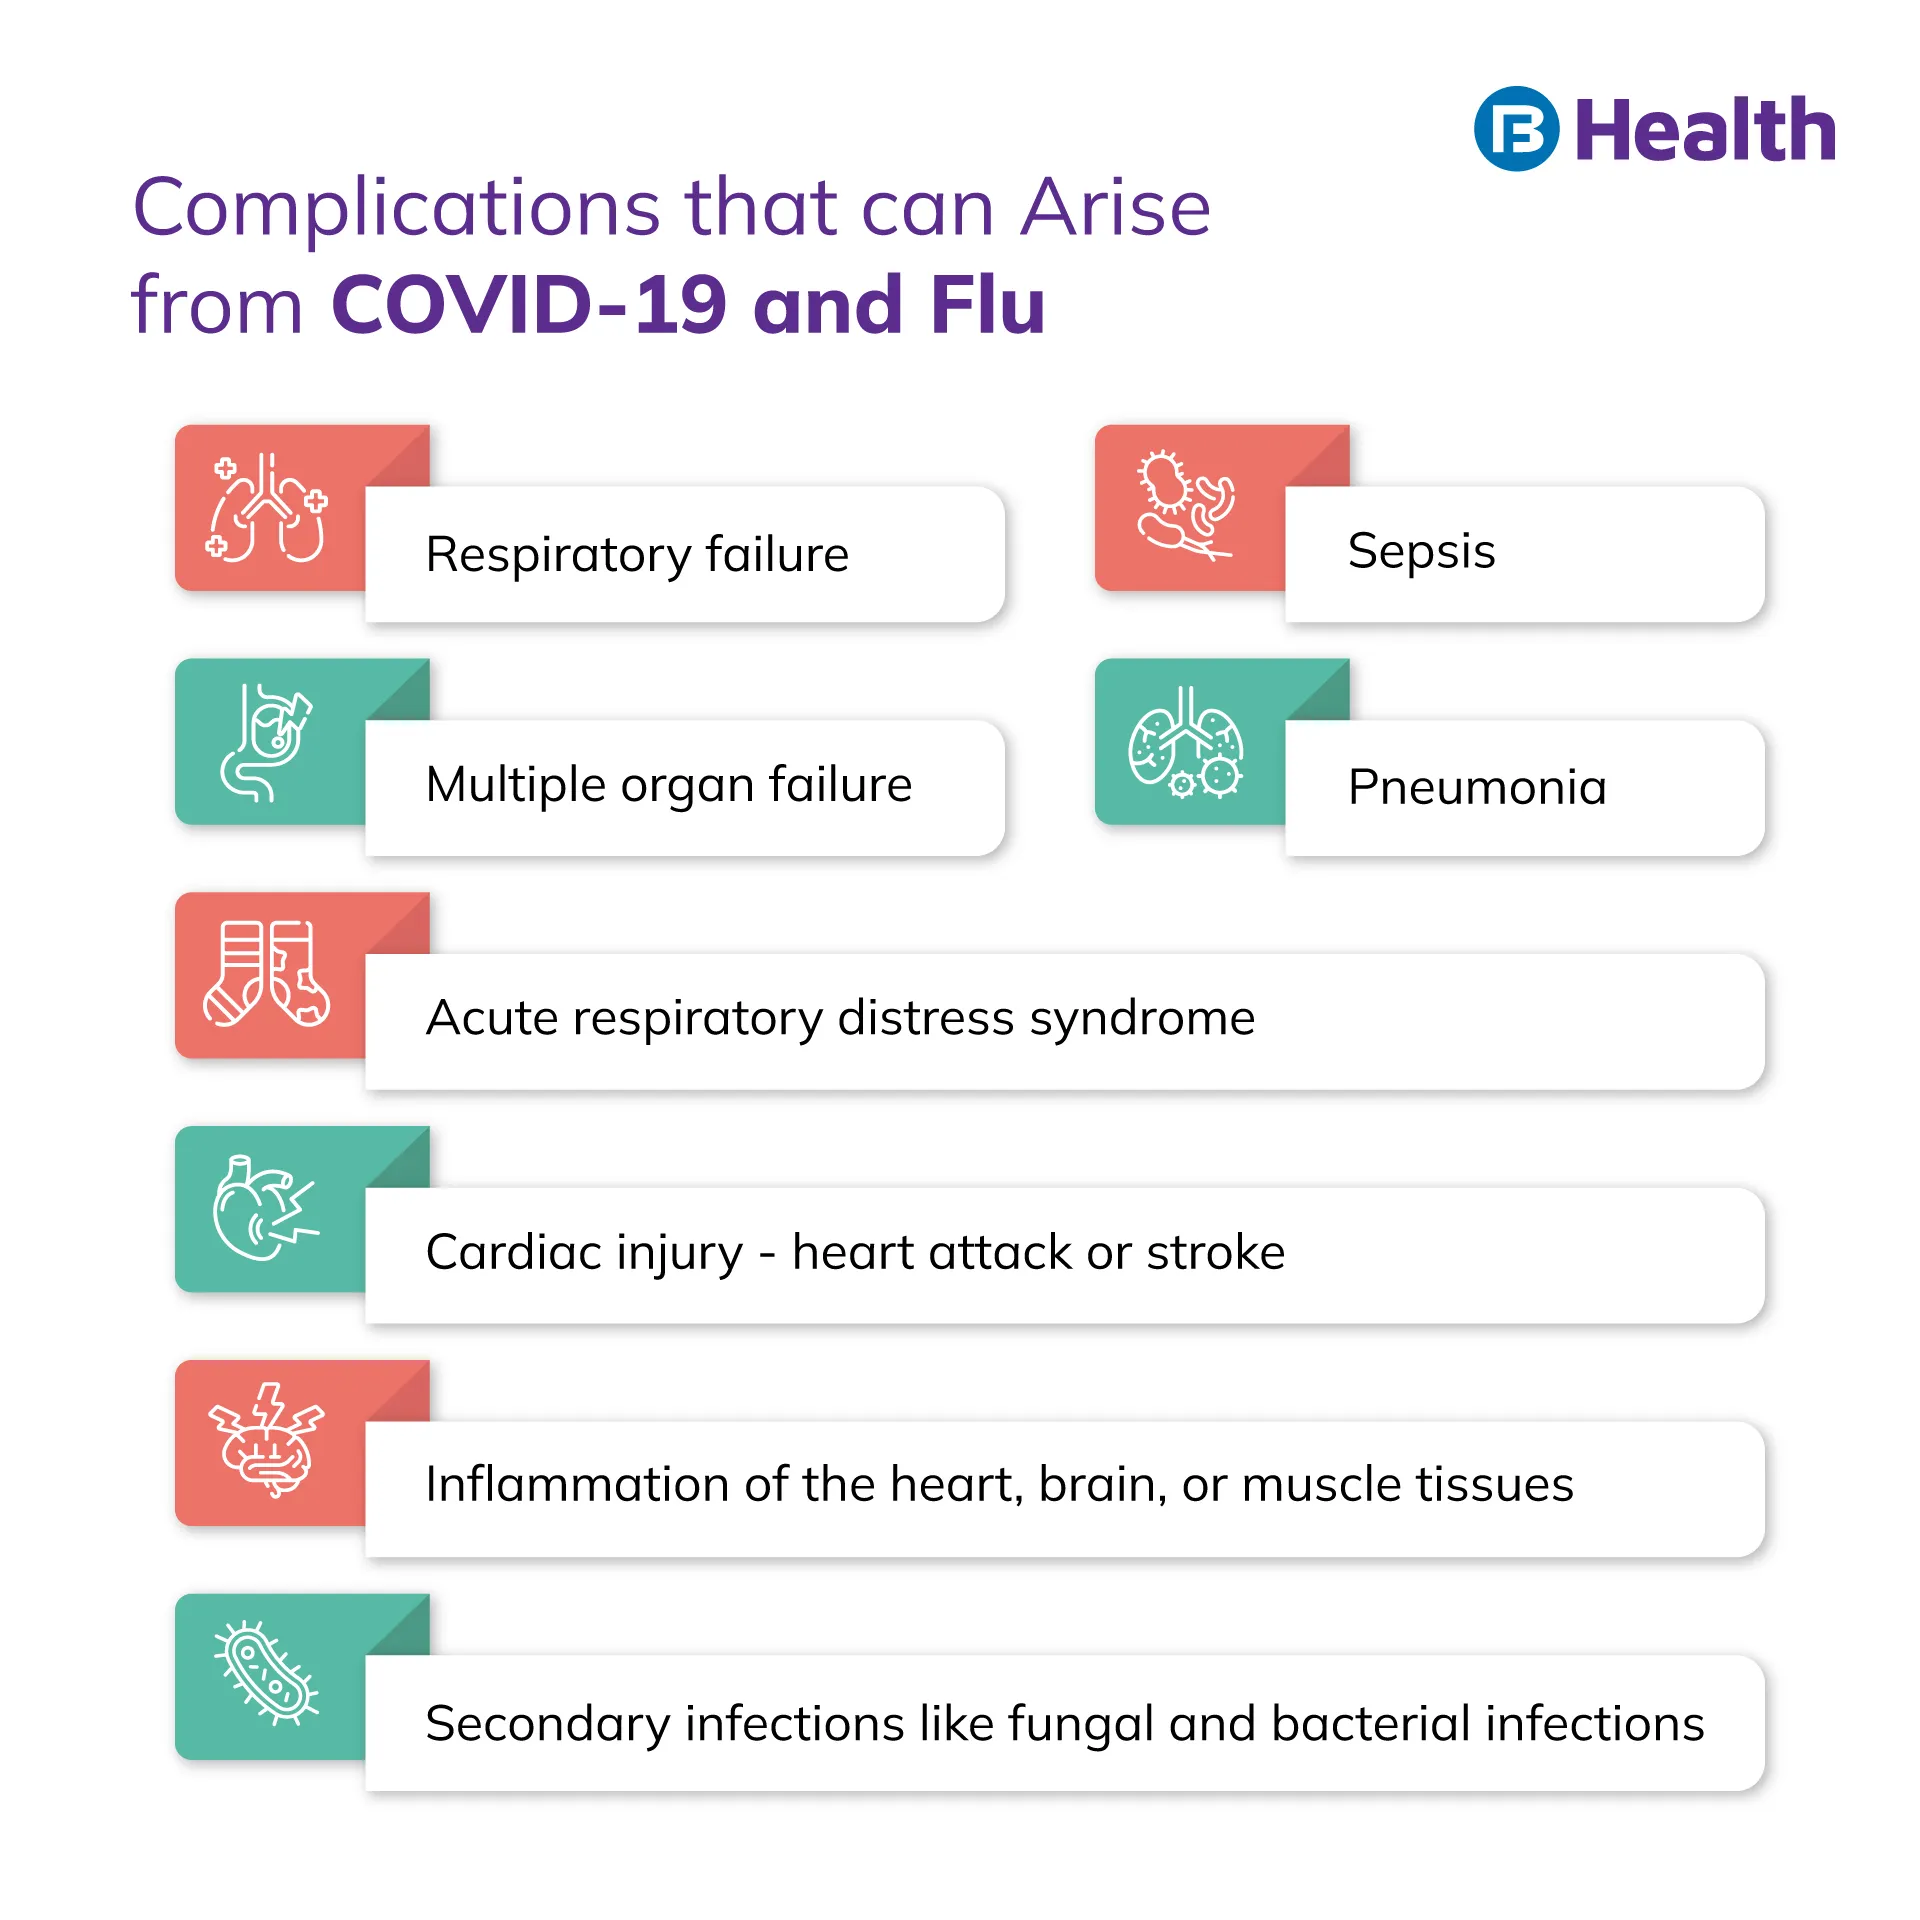 COVID - 19 and flu complications